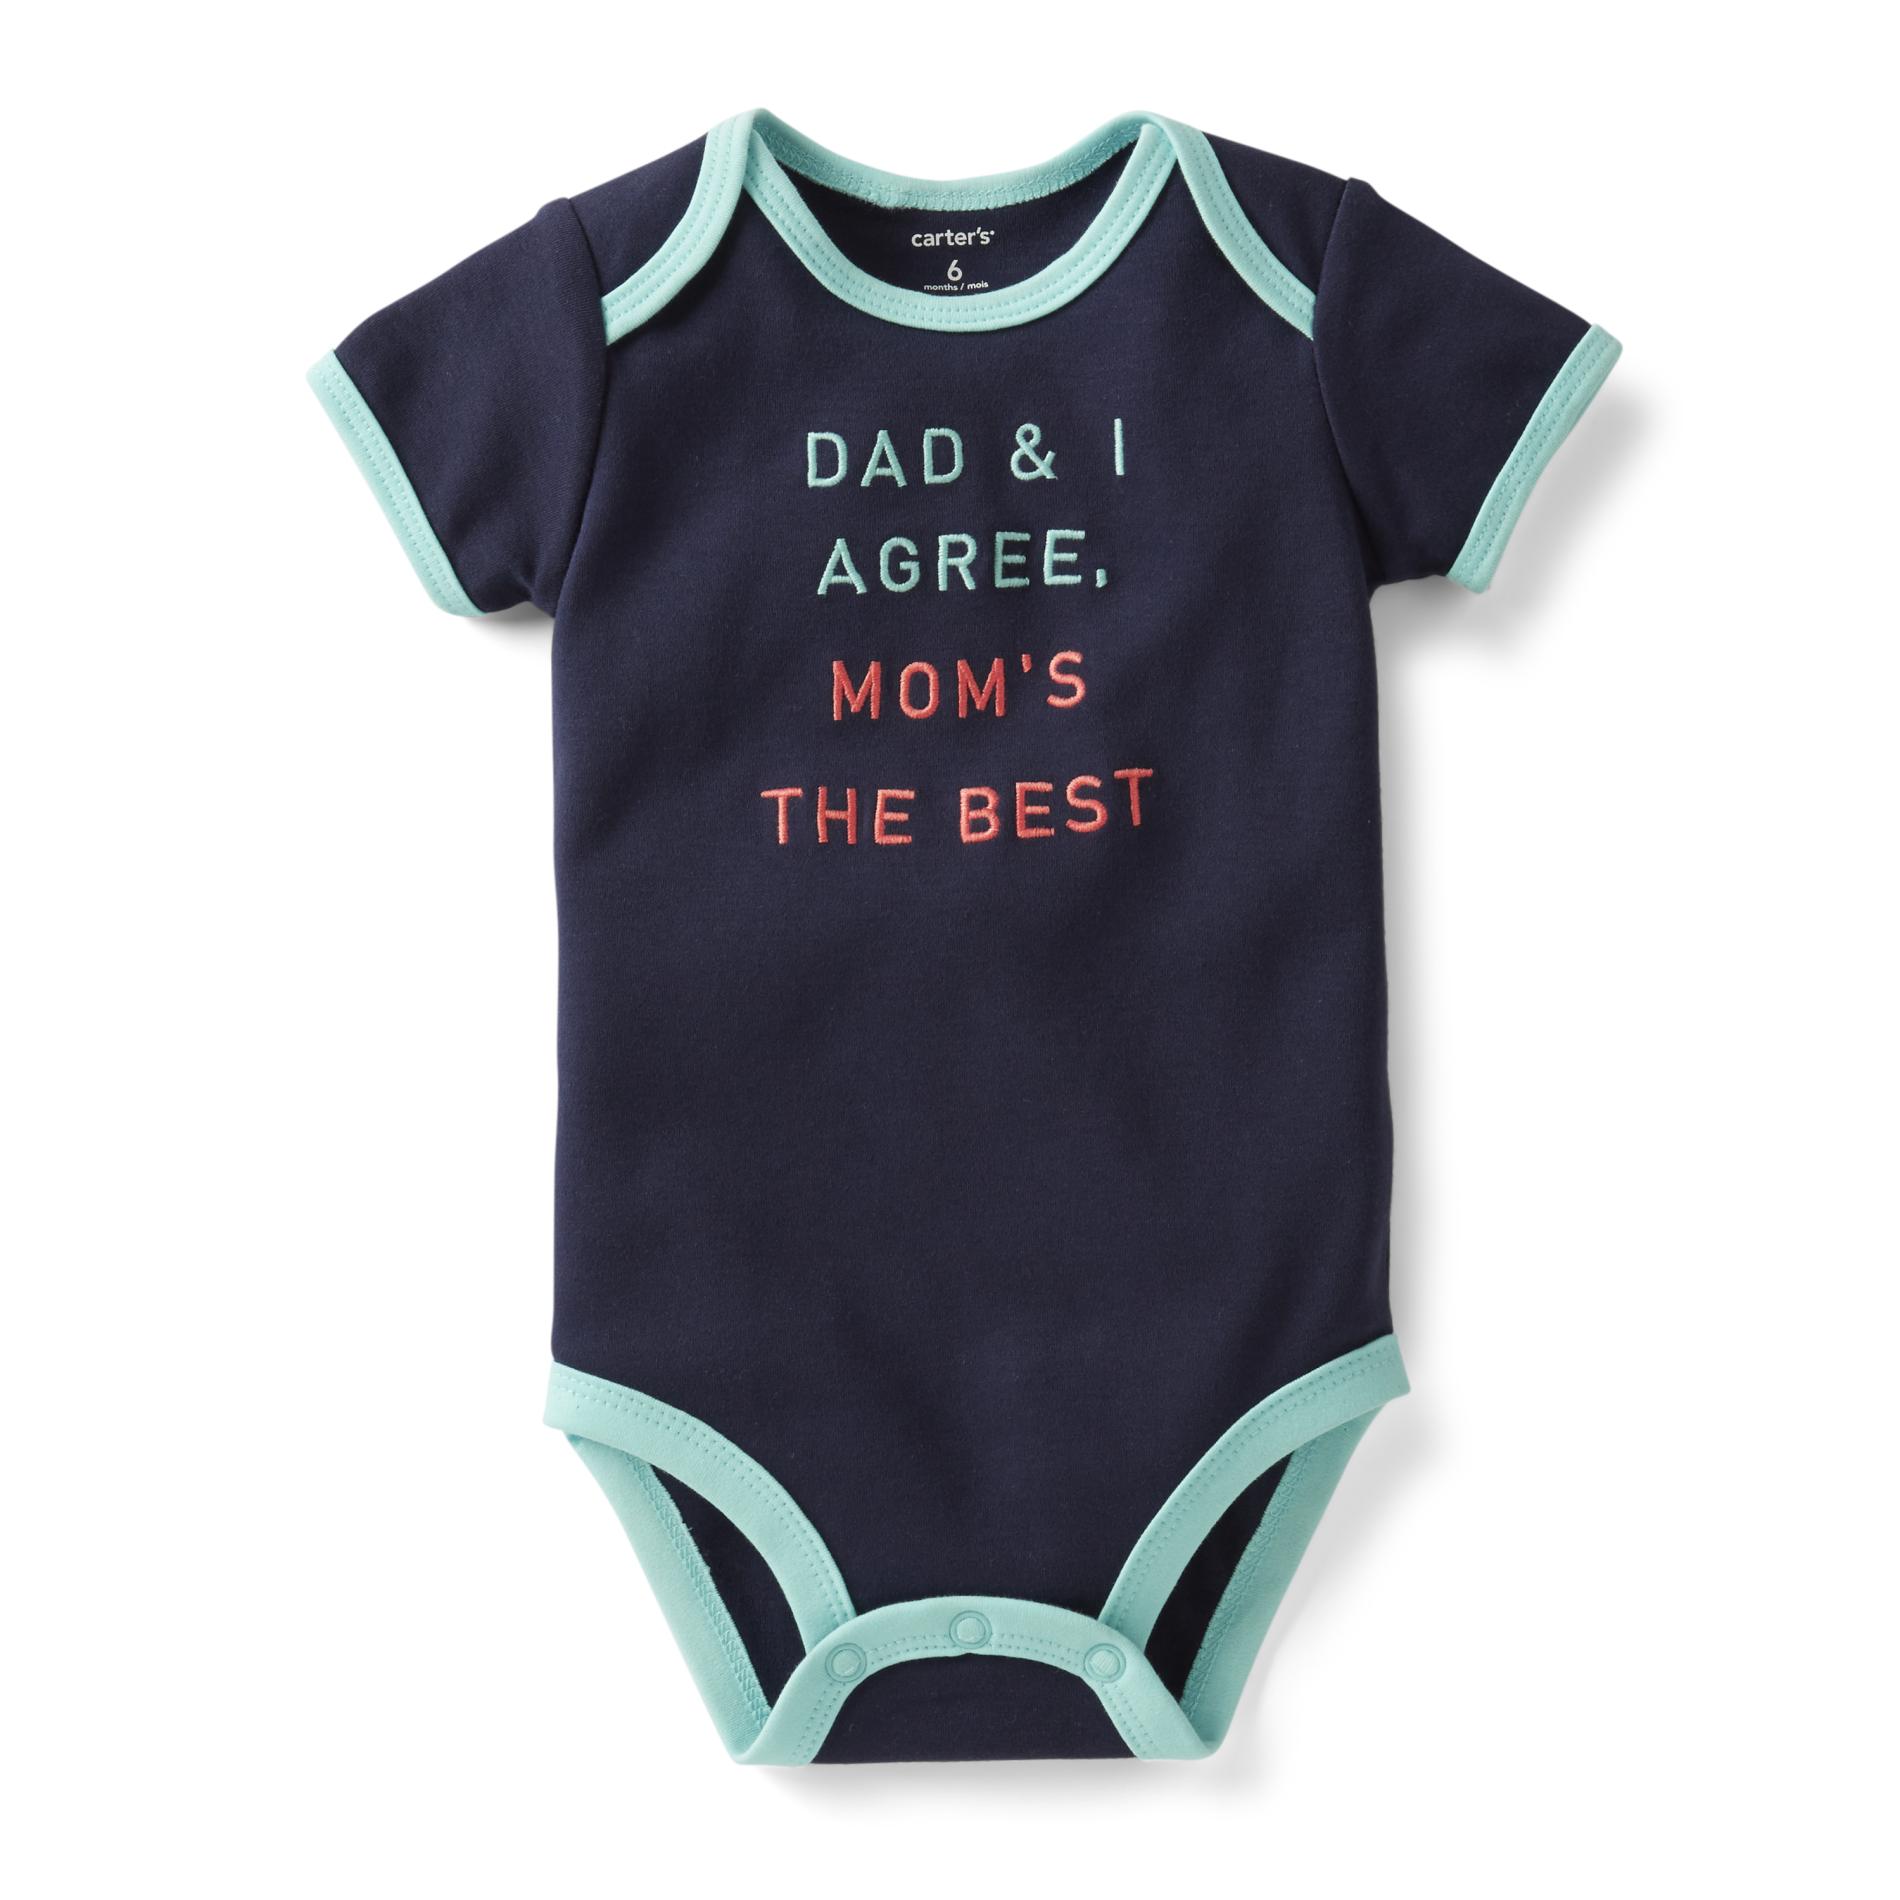 Carter's Newborn Boy's Bodysuit - Mom's The Best